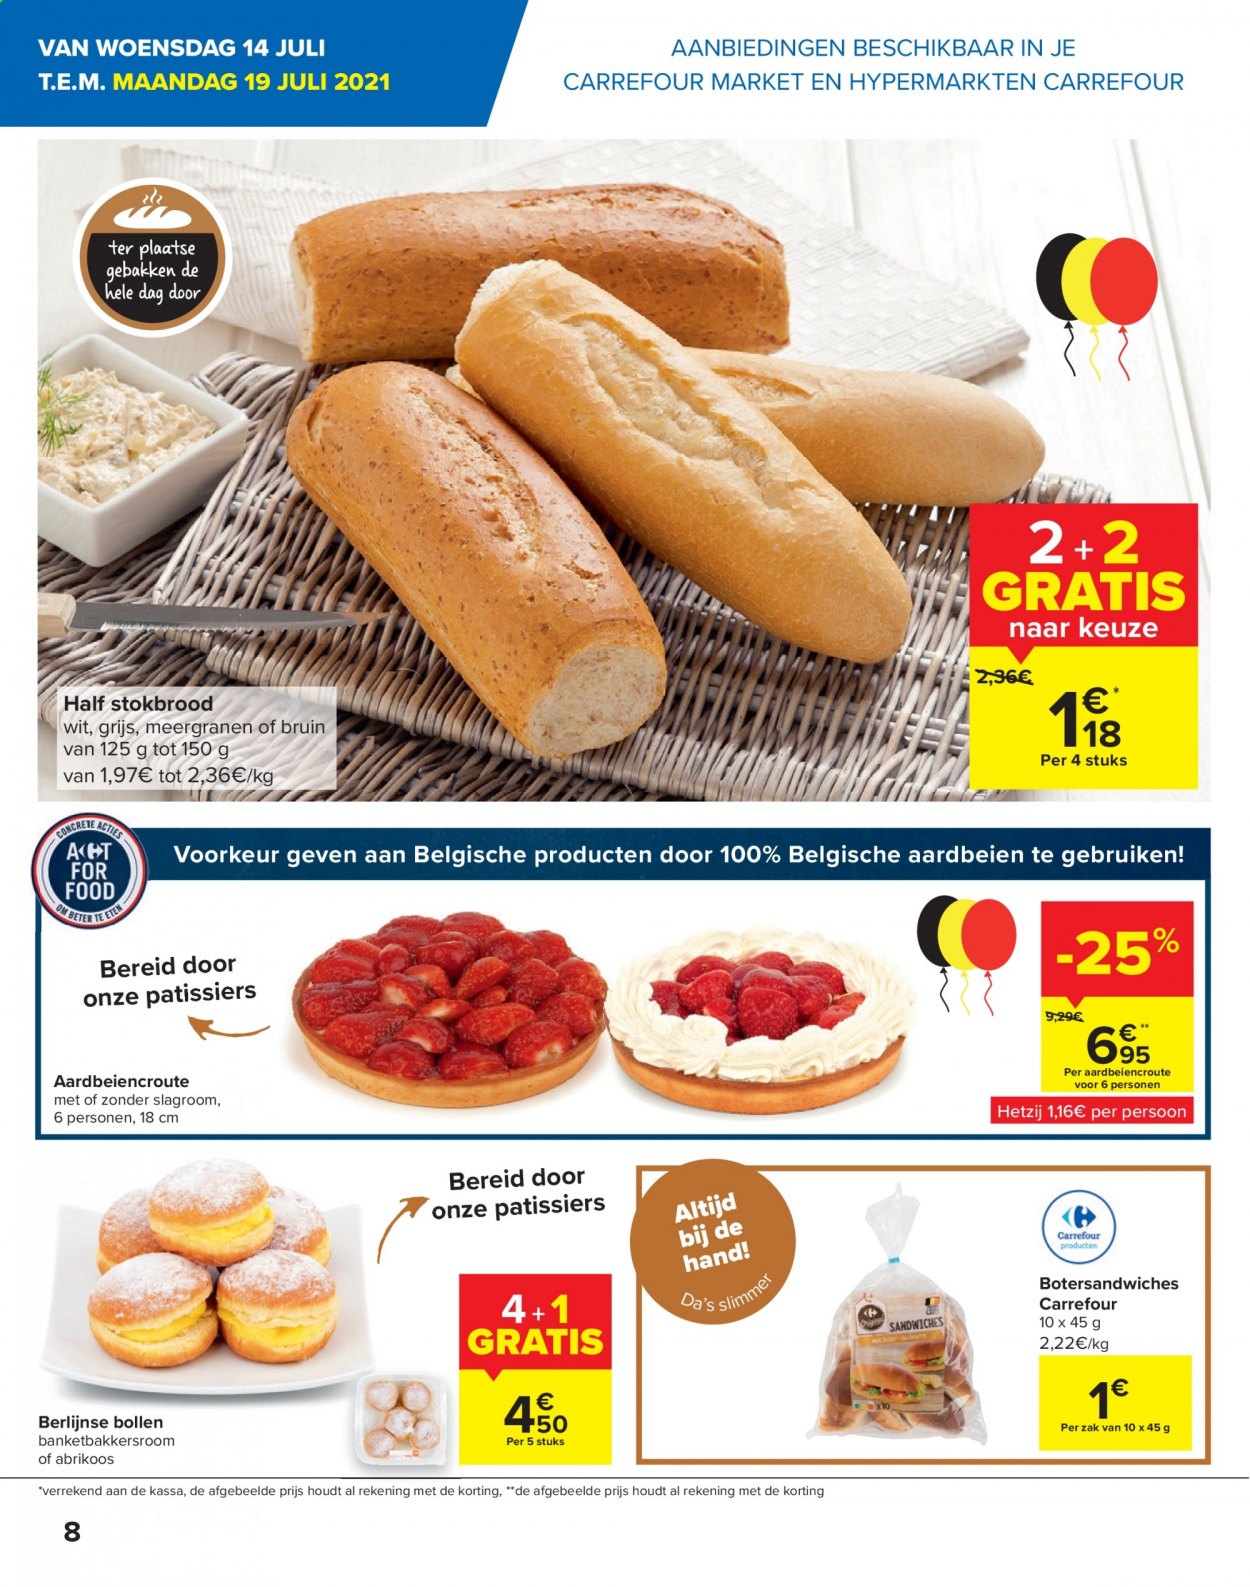 thumbnail - Carrefour-aanbieding - 14/07/2021 - 26/07/2021 -  producten in de aanbieding - aardbeien, slagroom, stokbrood. Pagina 8.